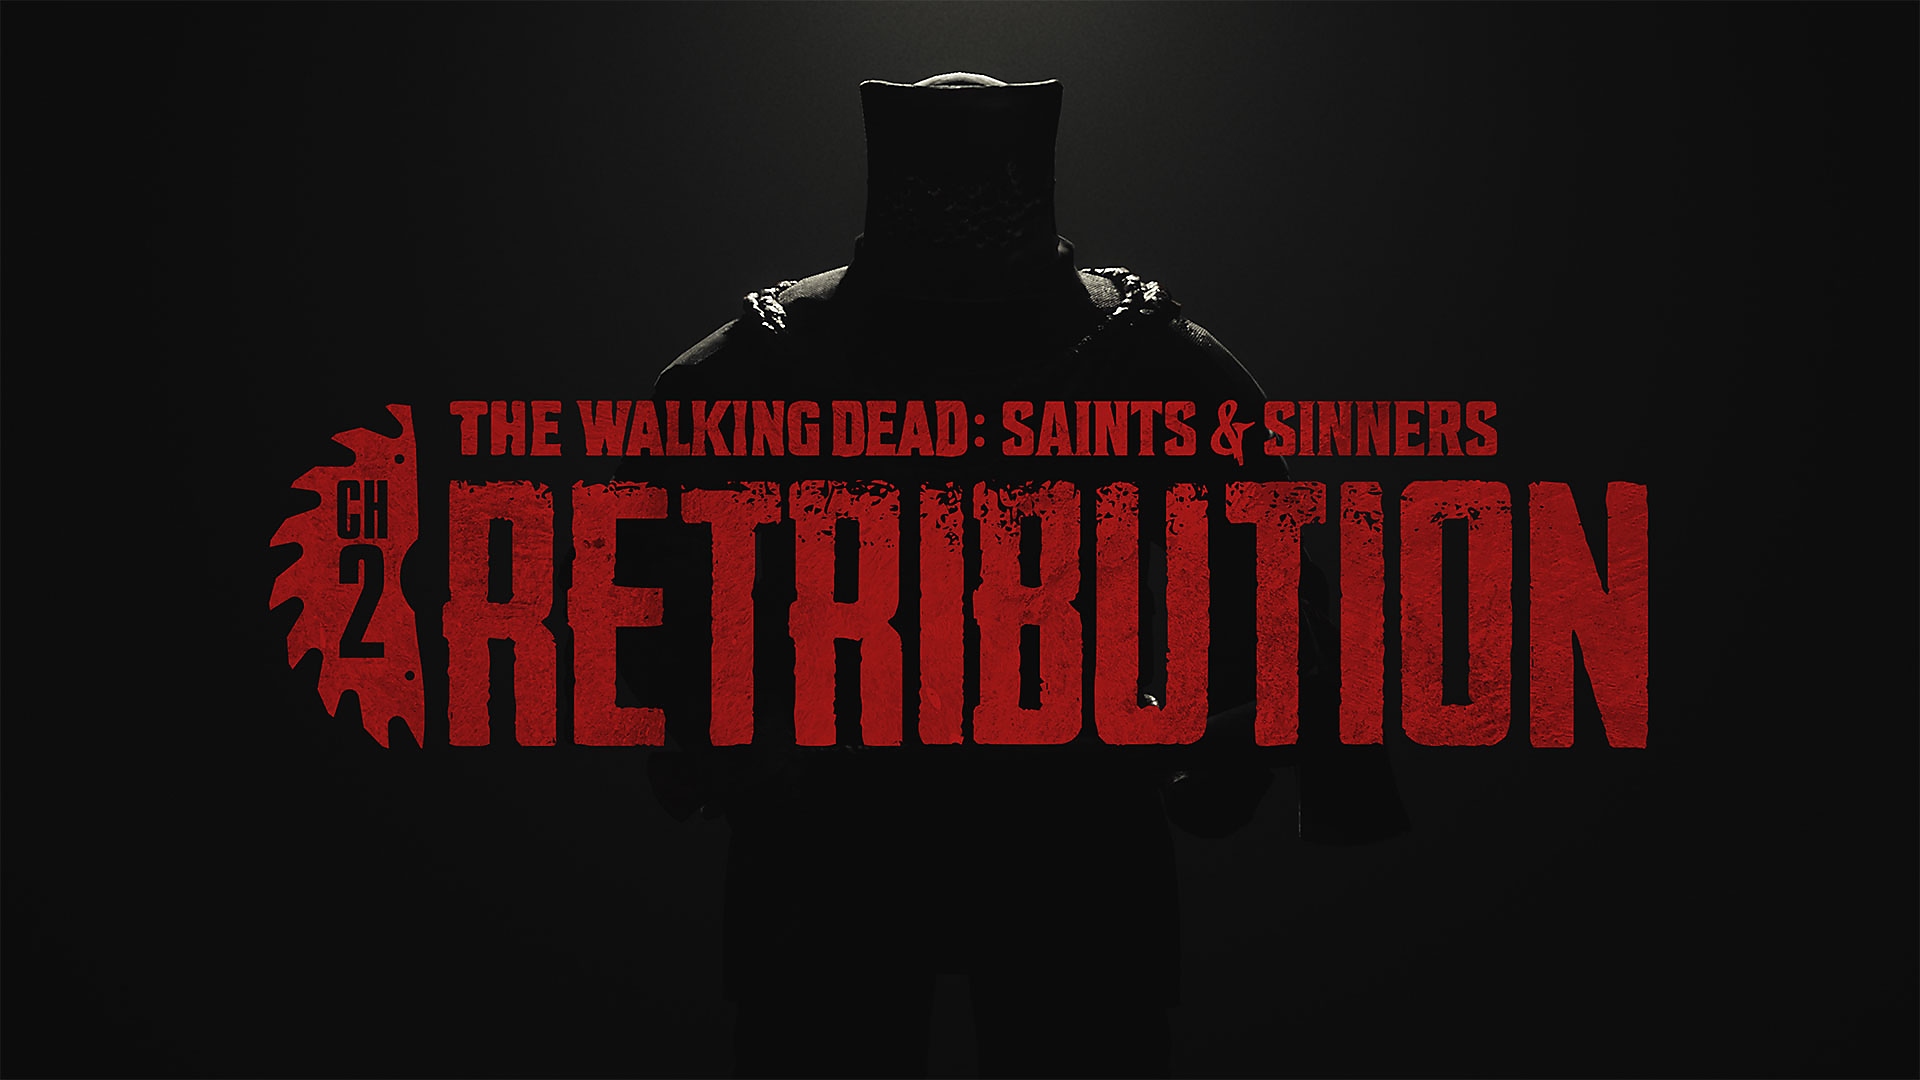 The Walking Dead: Saints & Sinners - Chapter 2: Retribution 트레일러